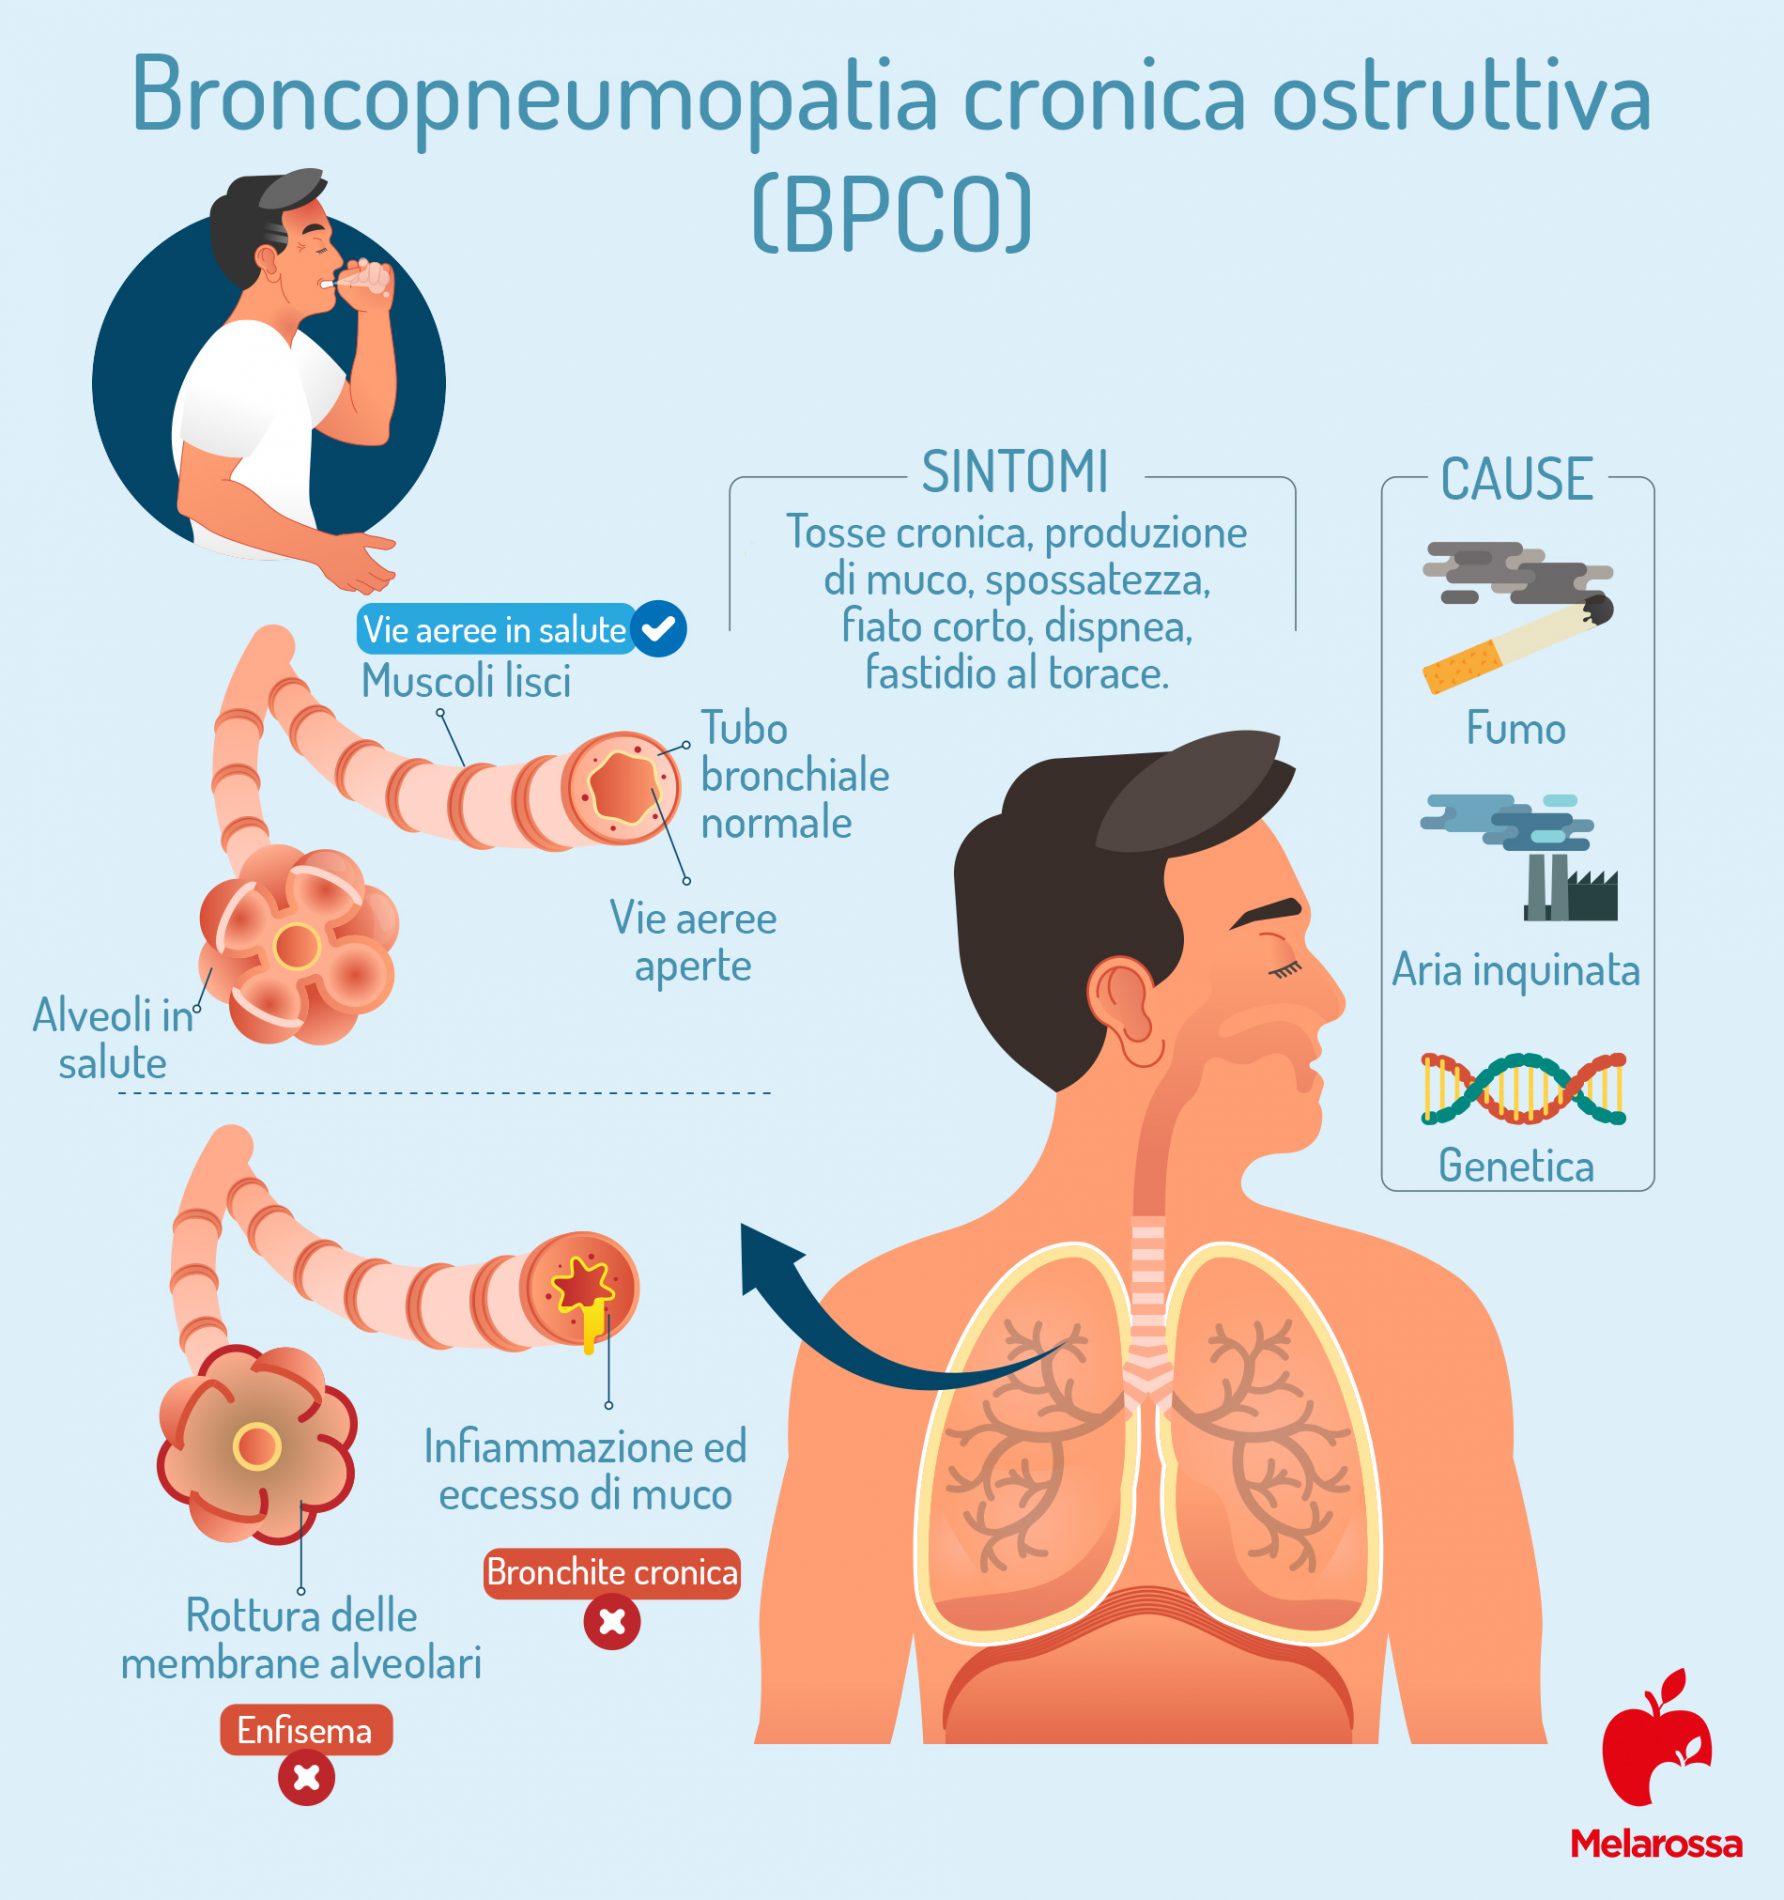 Broncopneumopatia cronica ostruttiva: cause e sintomi 